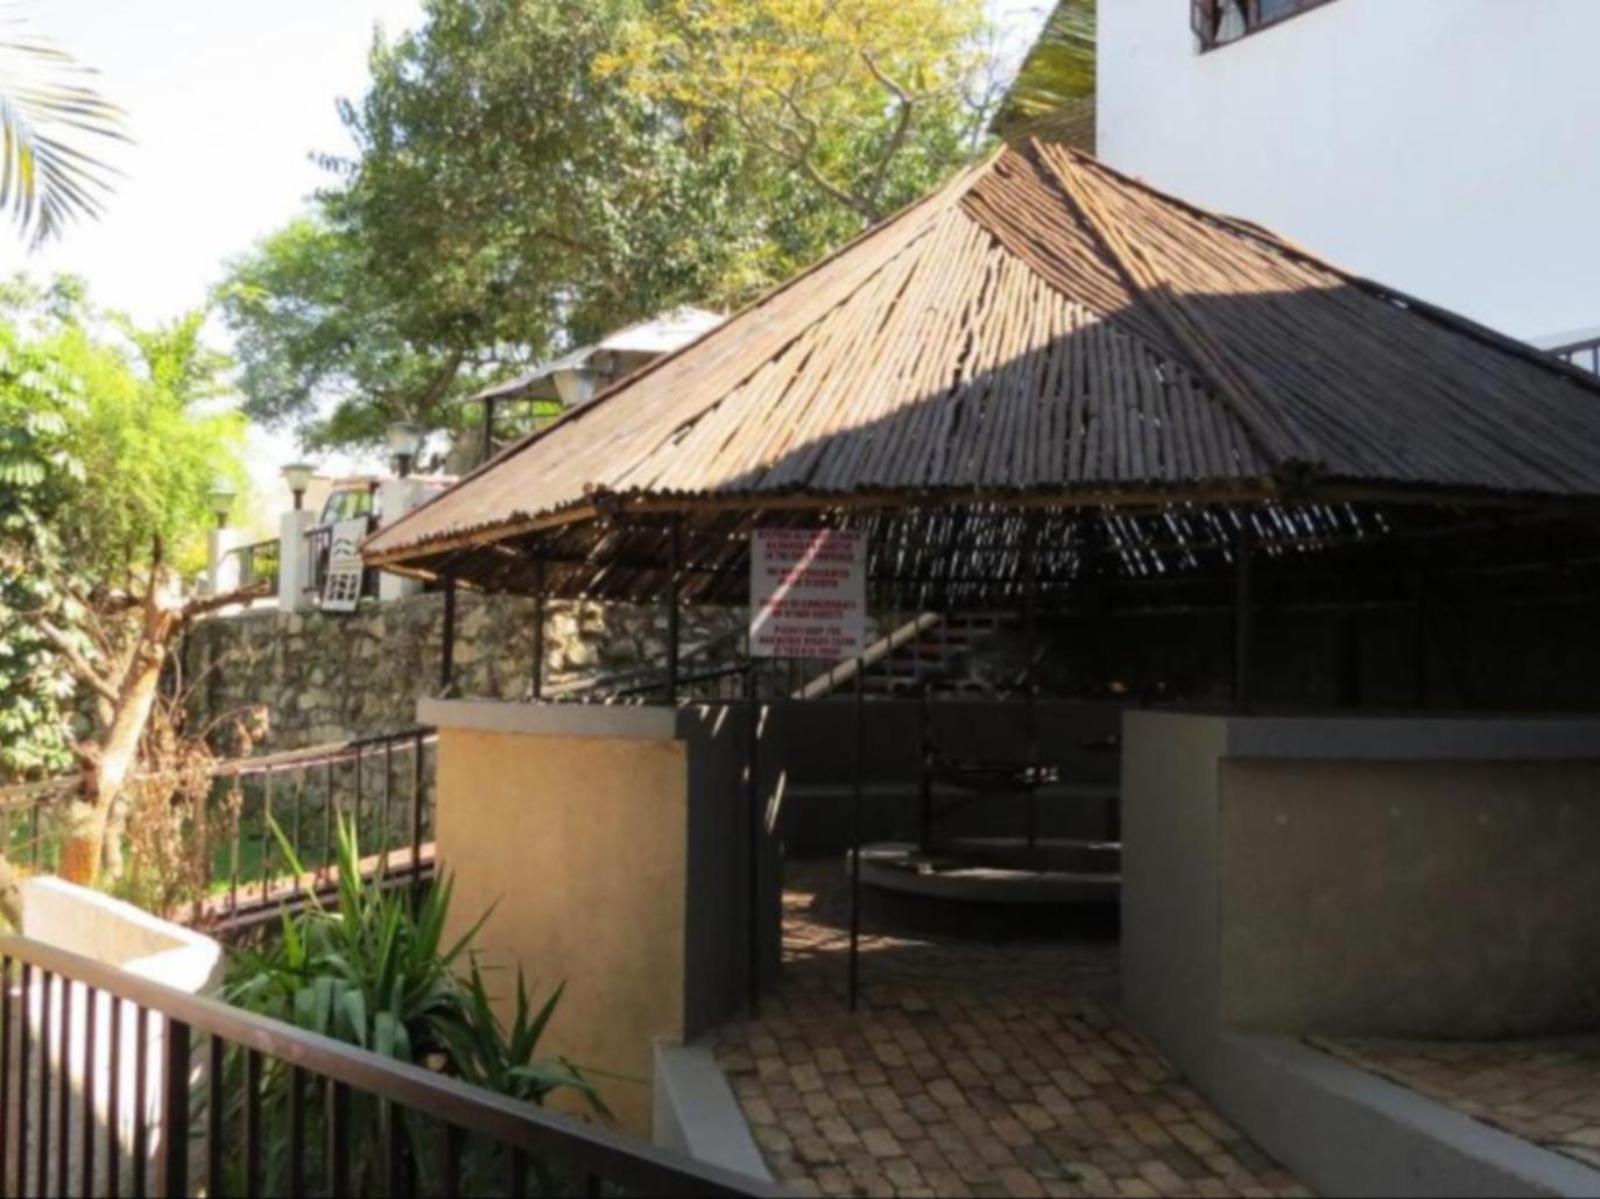 Pensao Guest Lodge Sonheuwel Nelspruit Mpumalanga South Africa House, Building, Architecture